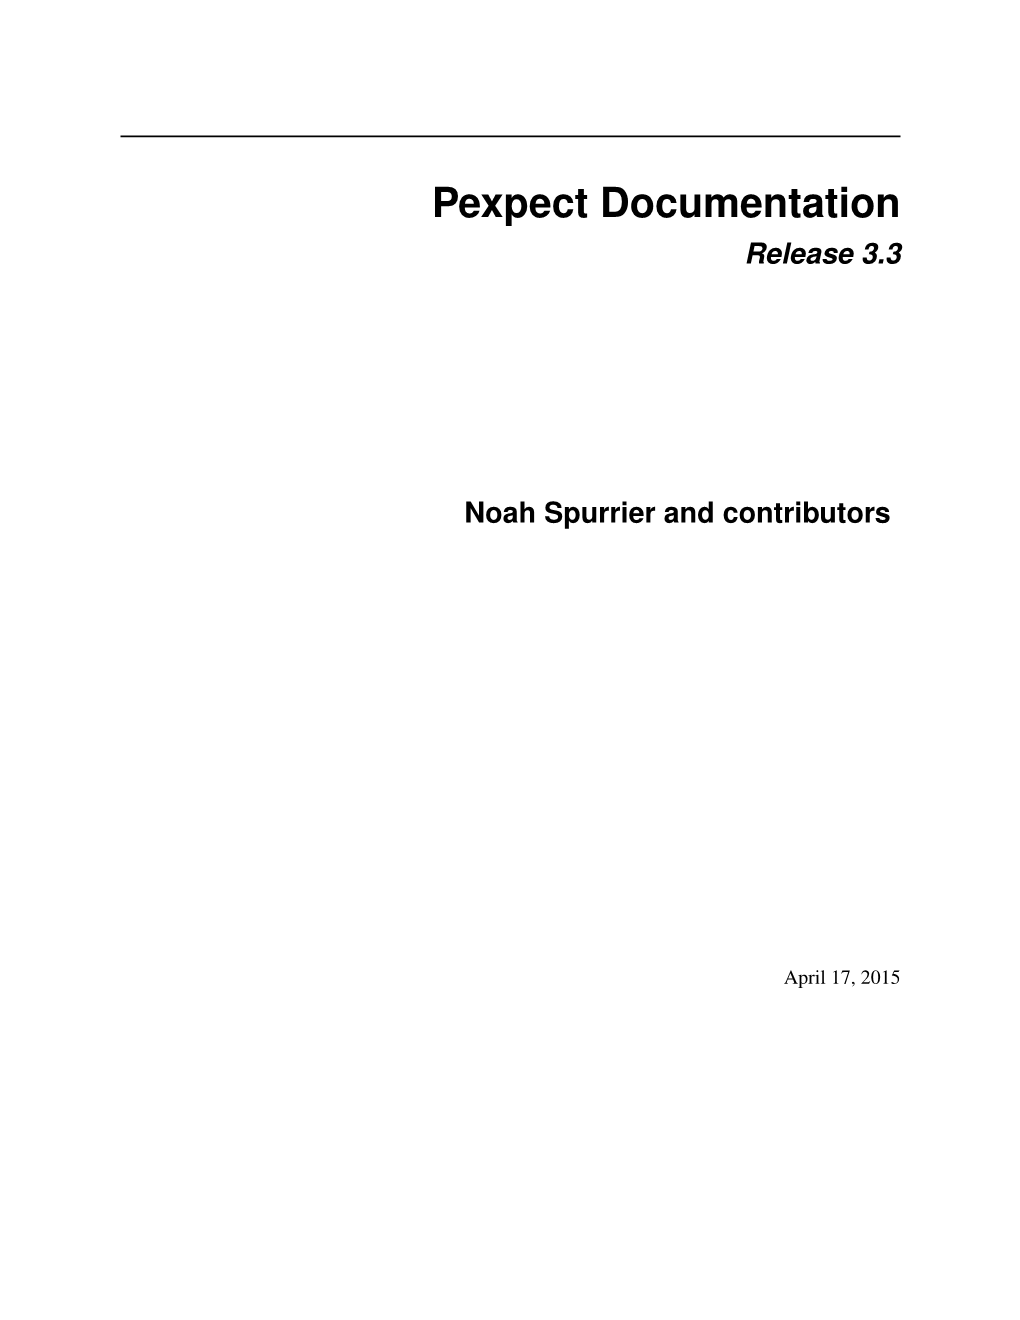 Pexpect Documentation Release 3.3